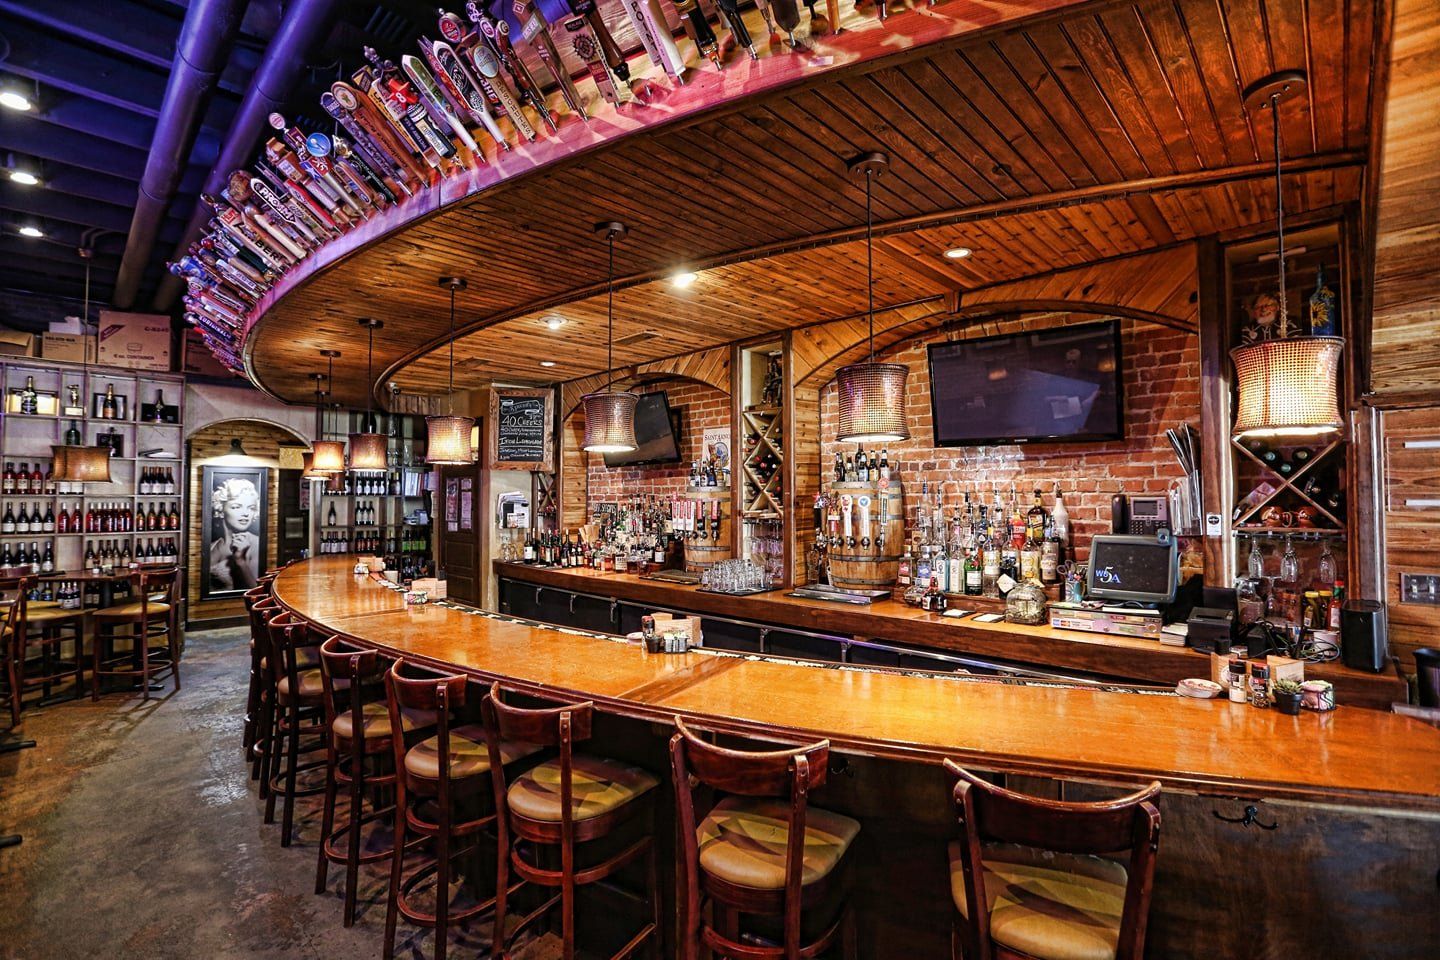 The Red Brick Tavern Bar